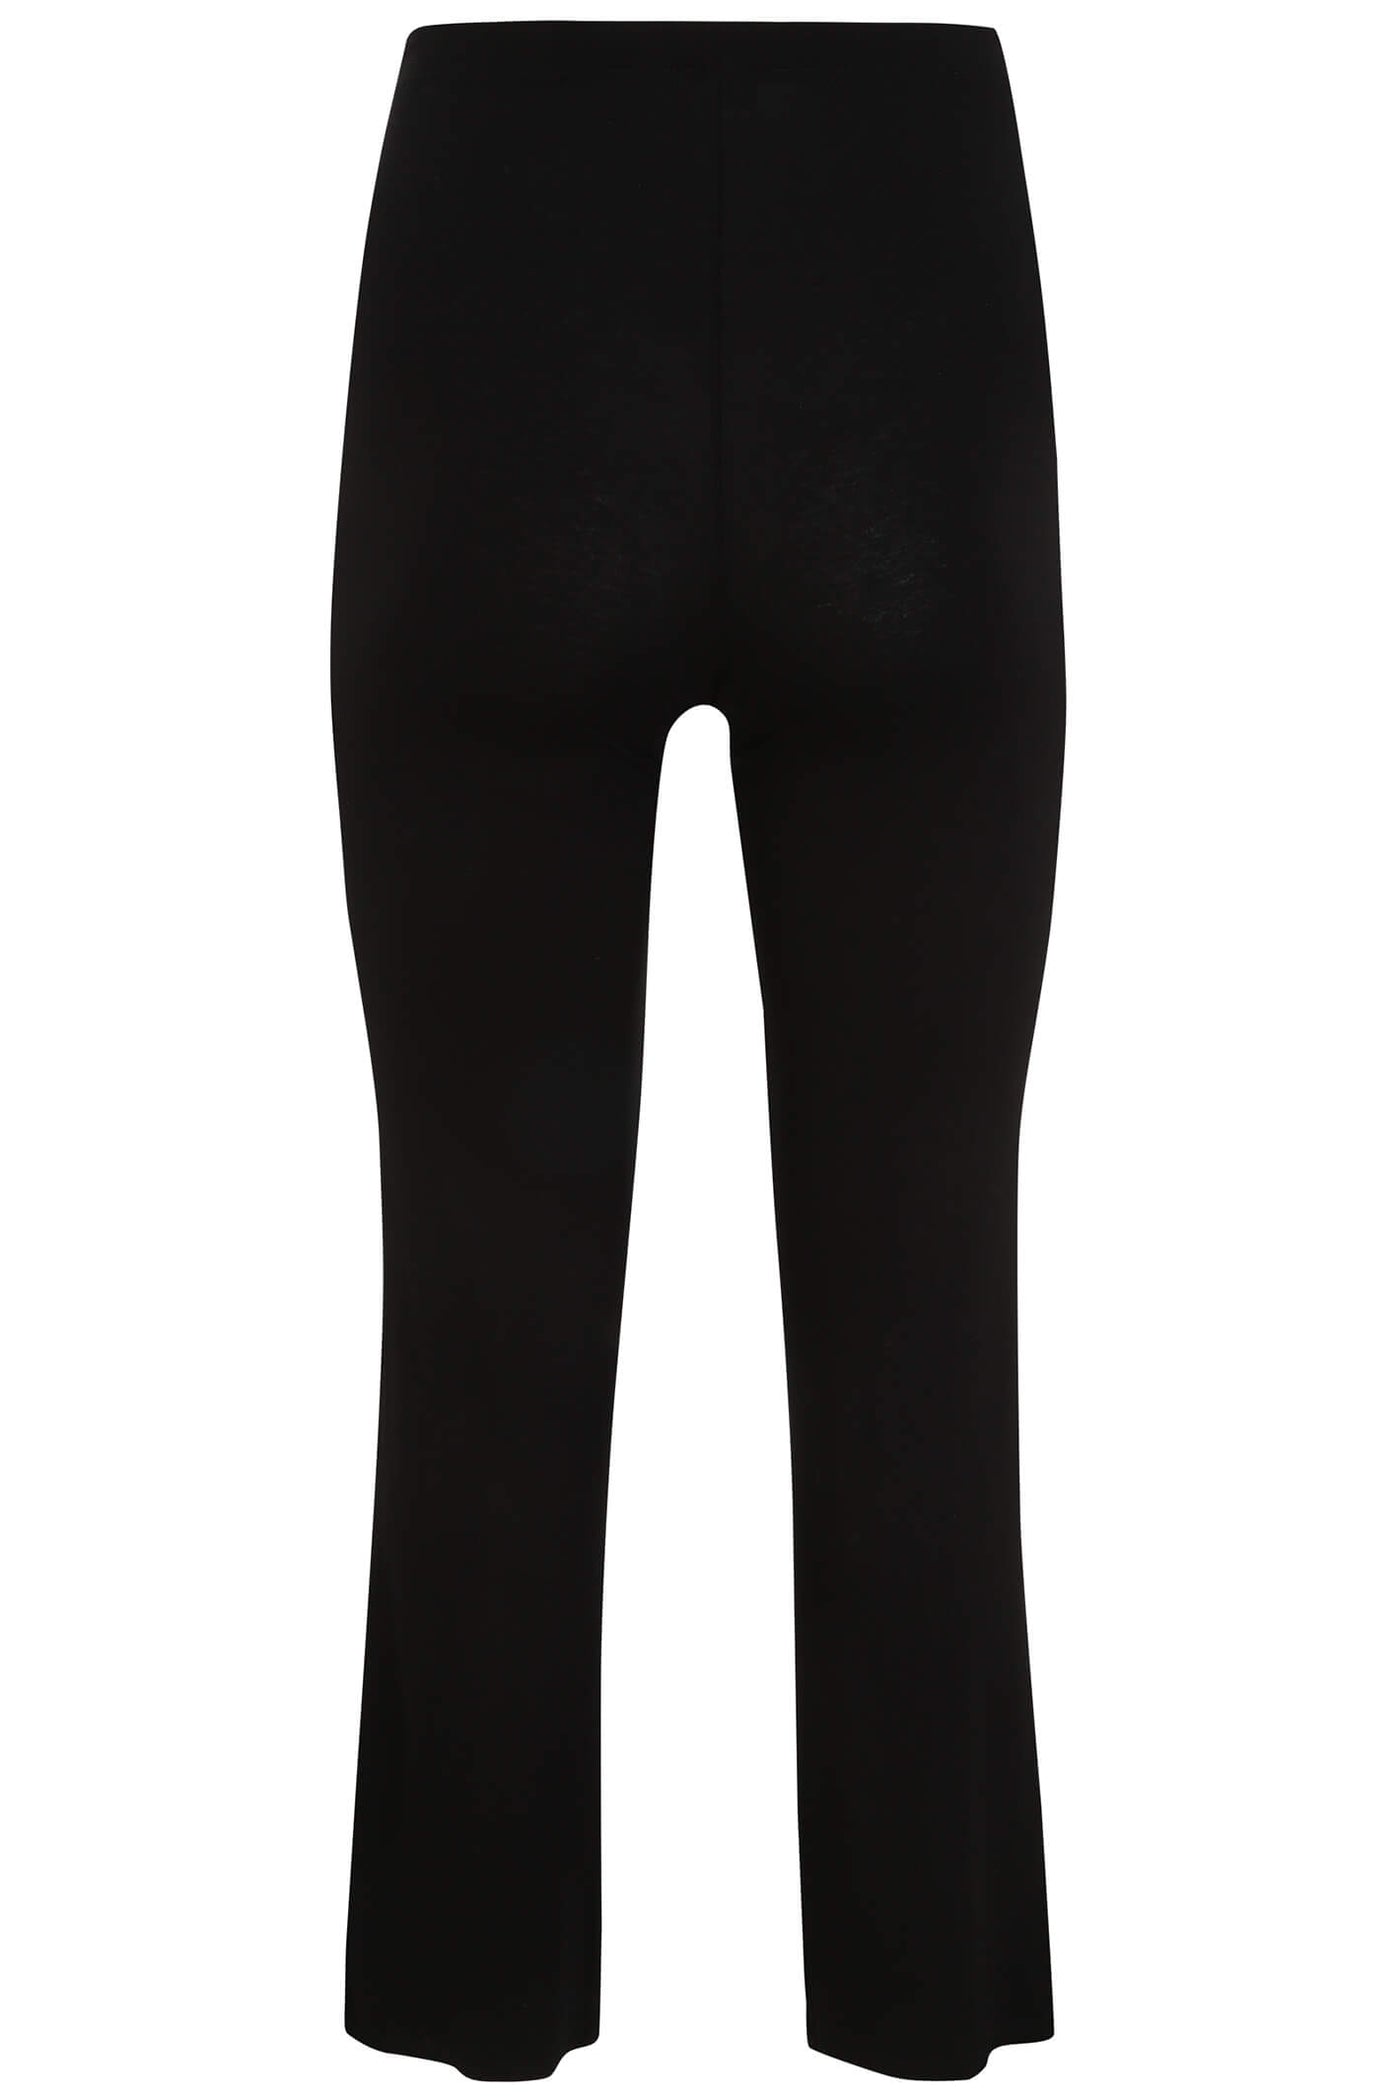 Doris Streich 809 270 Black Elastic Waist Pull-On Trousers - Rouge Boutique